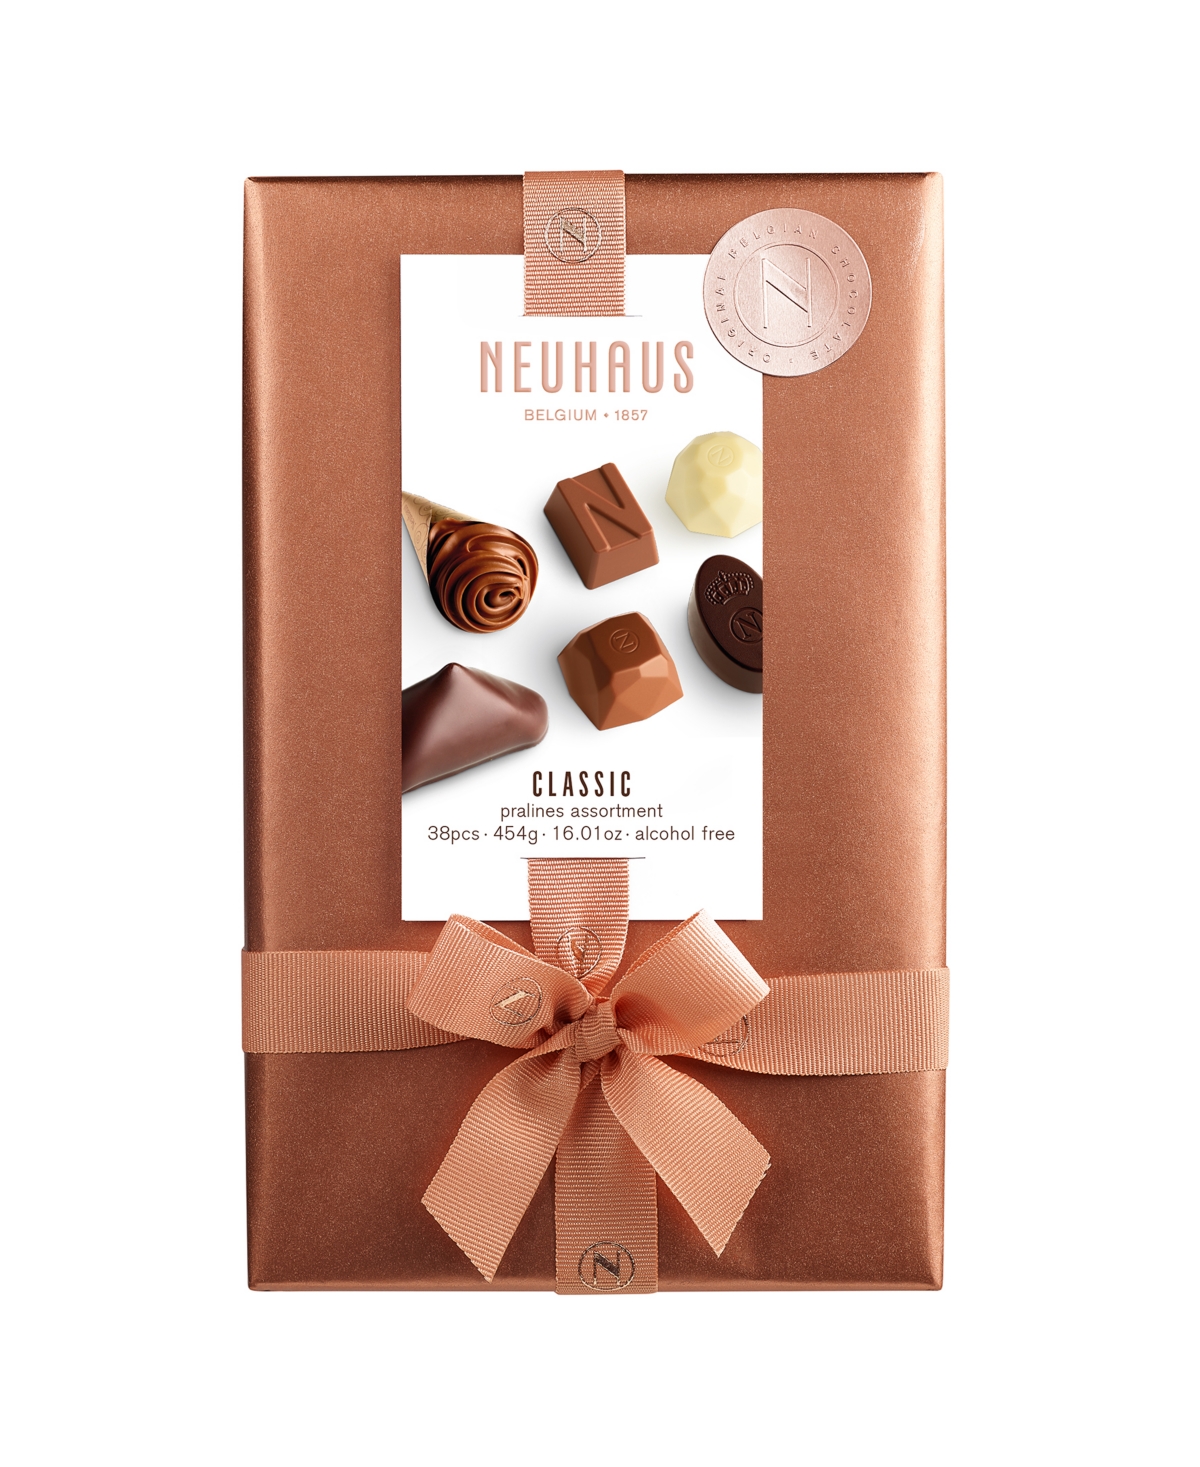 Neuhaus Classic Ballotin Chocolates, 38 Piece